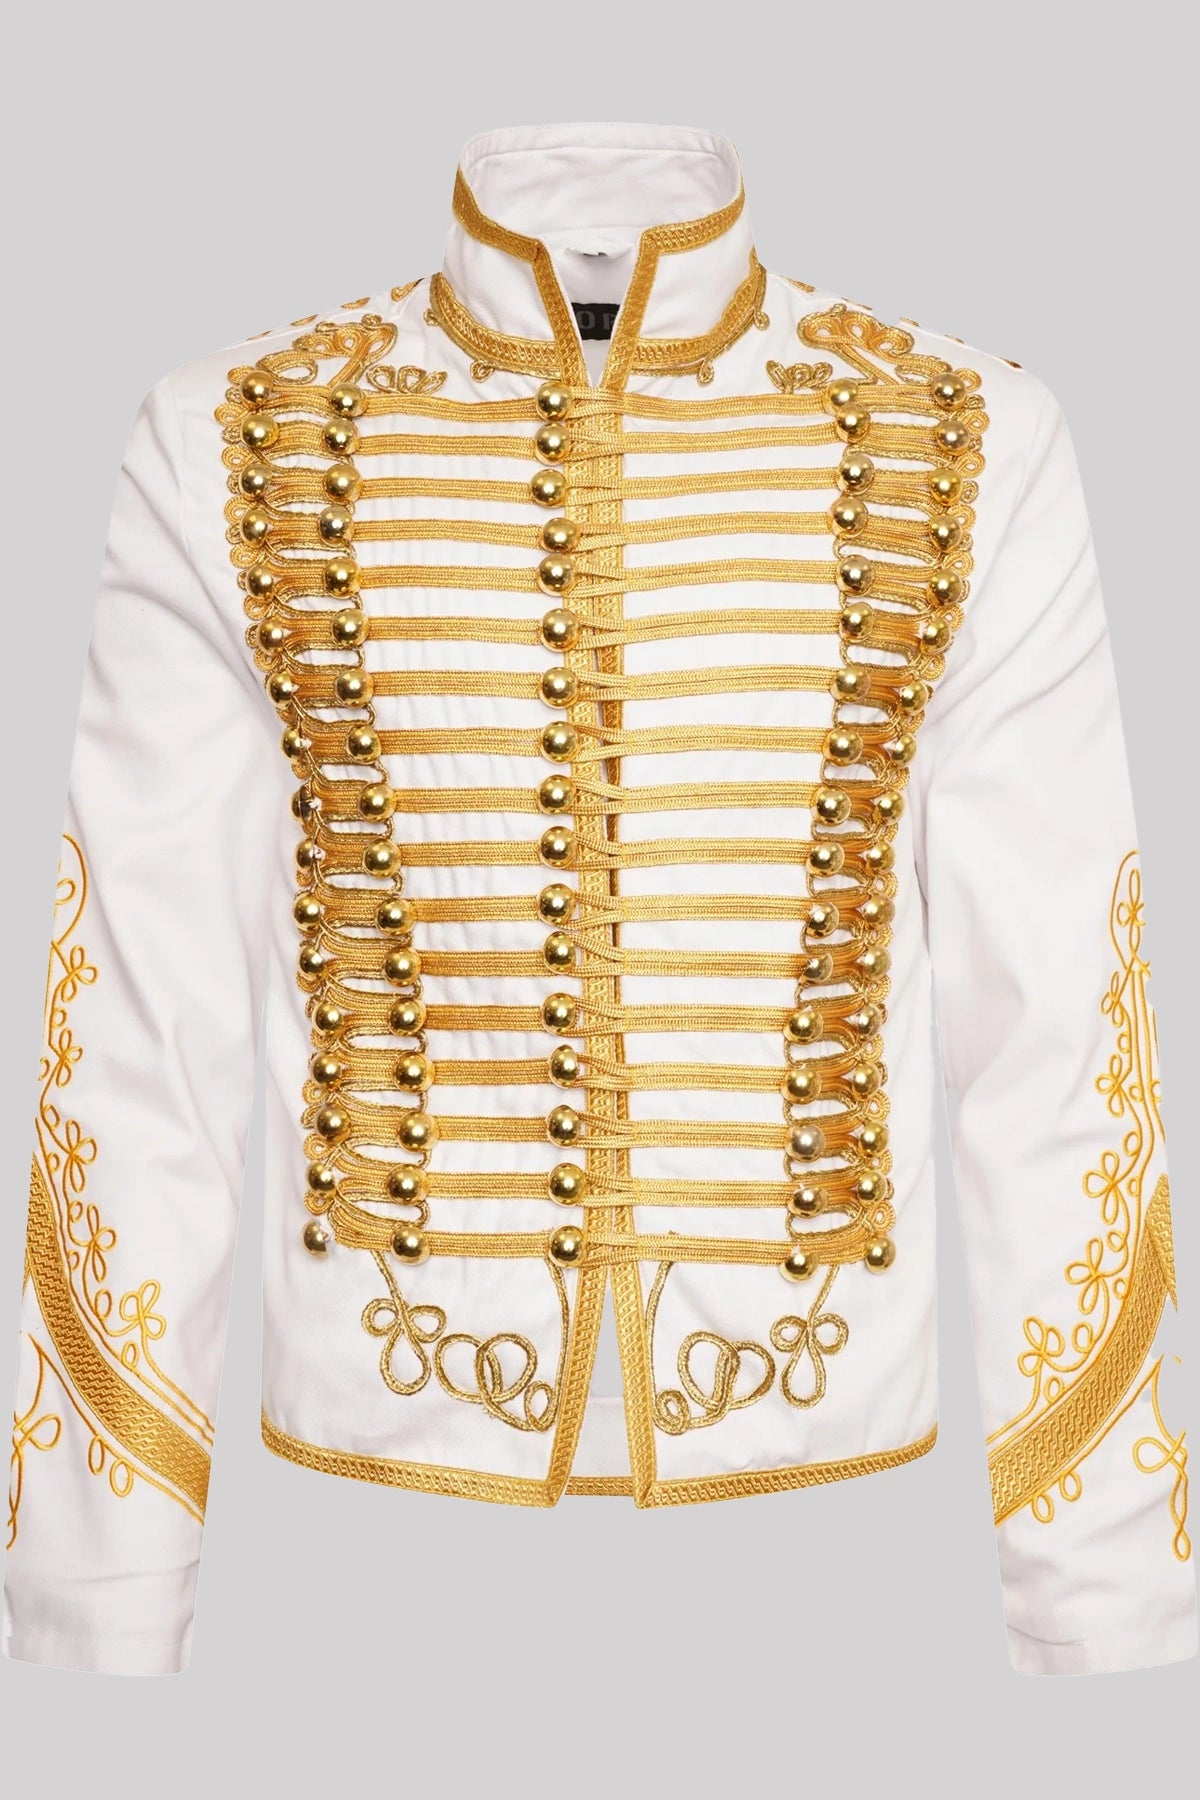 Ro Rox Men's Adam Luxe Military Drummer White Parade Jacket